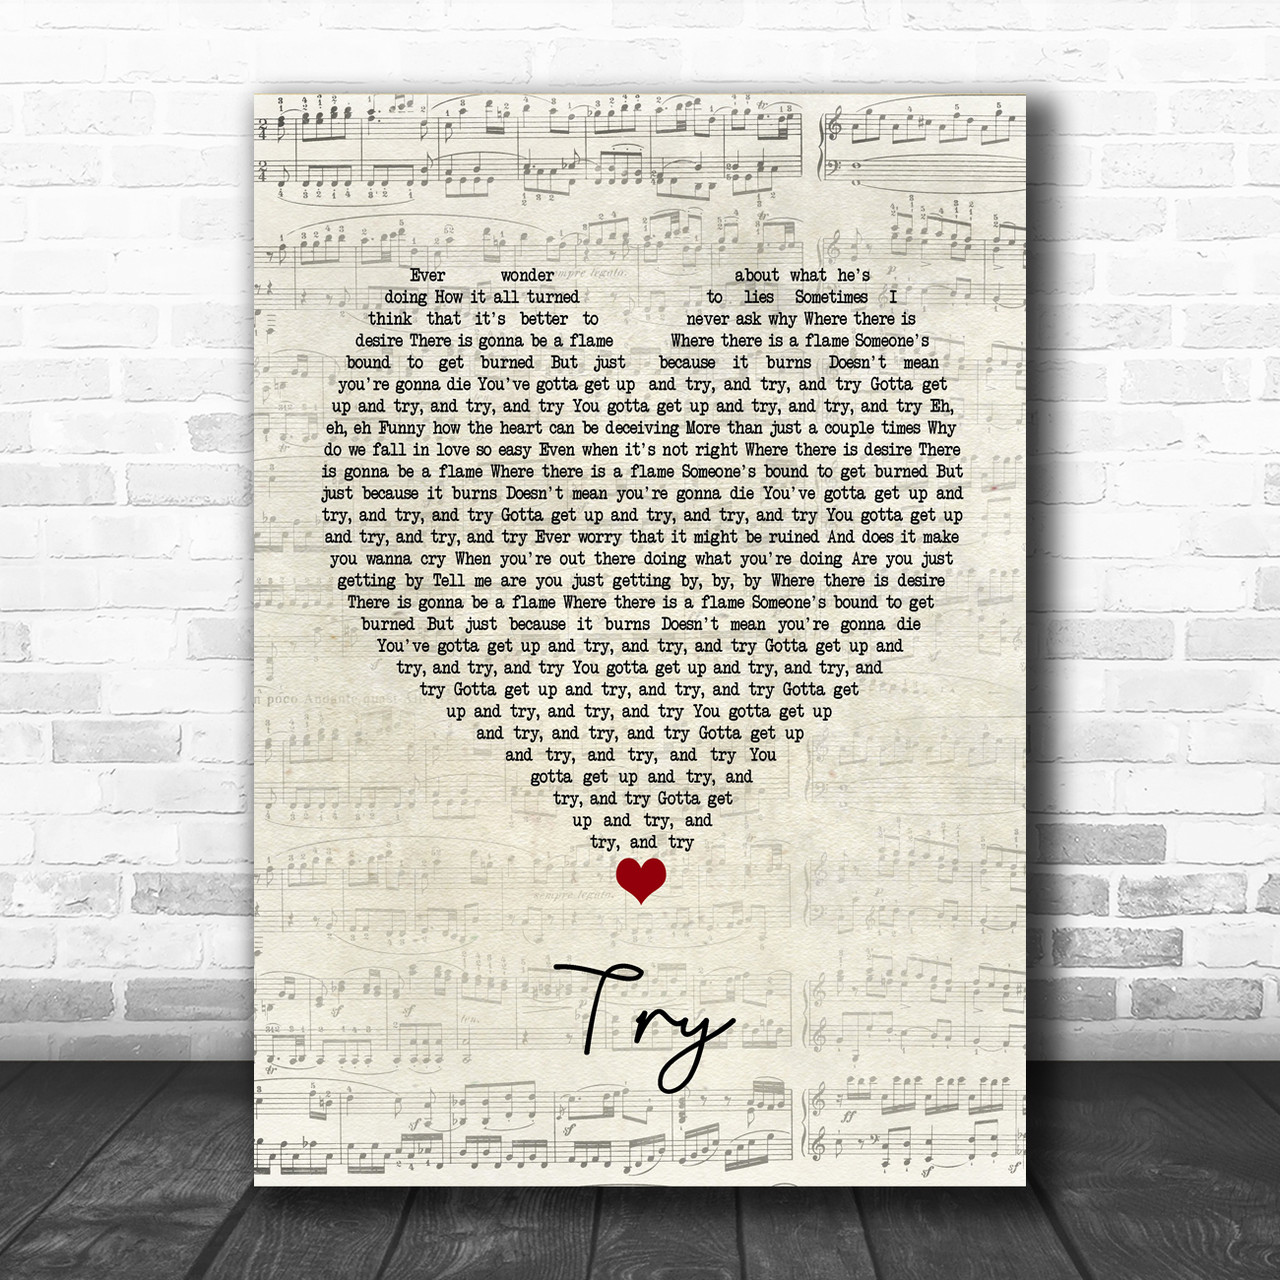 Heart Stencils 2 Pcs Love Heart Rose Templates A4 Sheet Assorted Size  Hearts